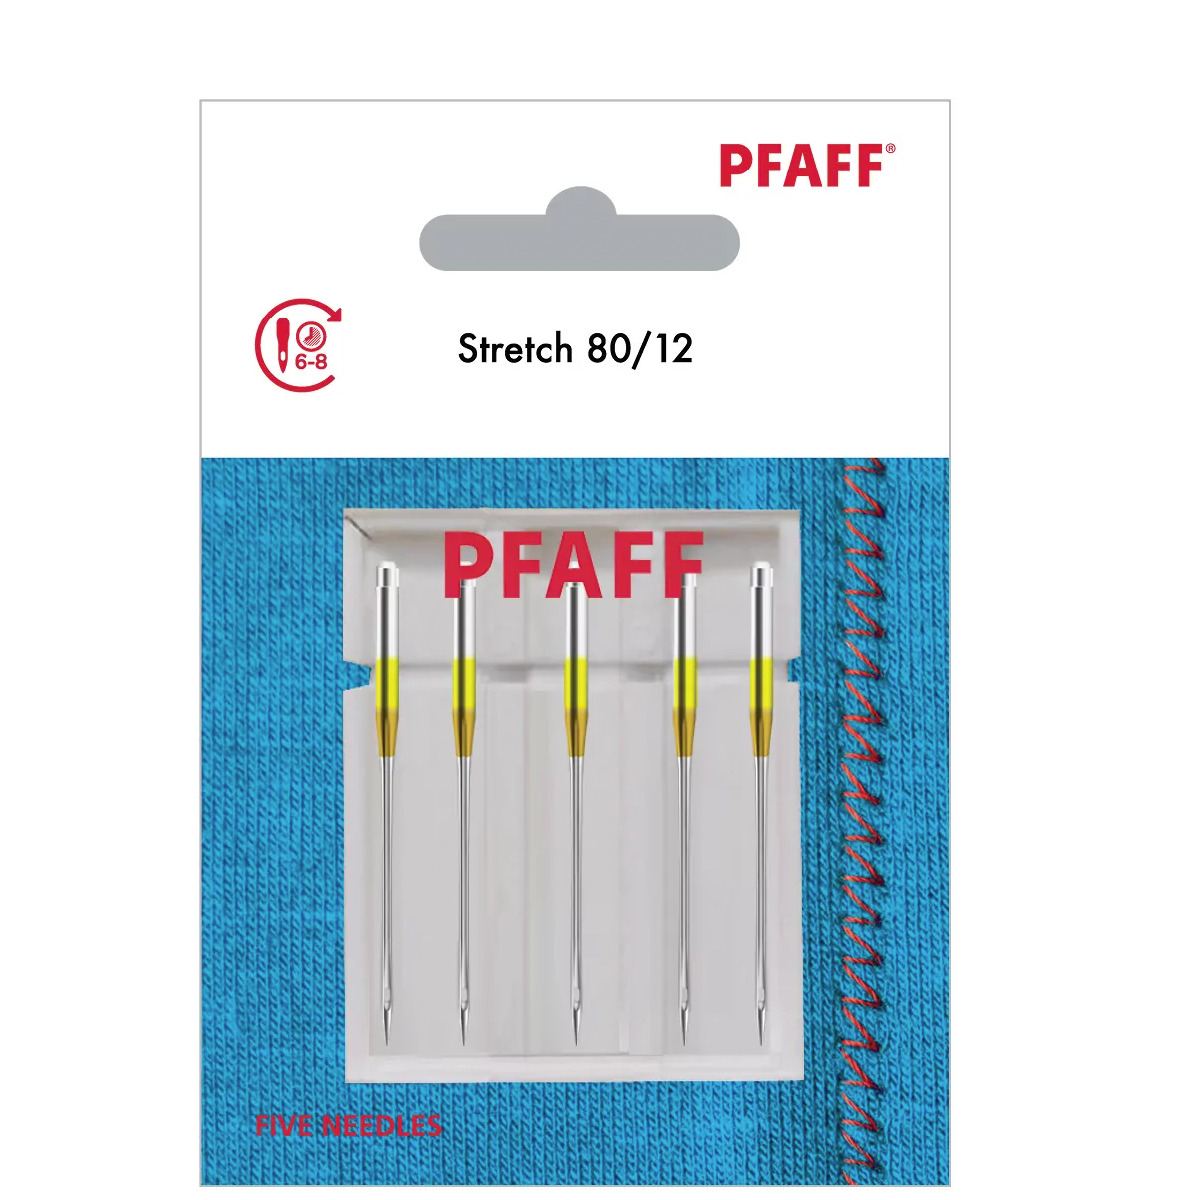 PFAFF stretch needles